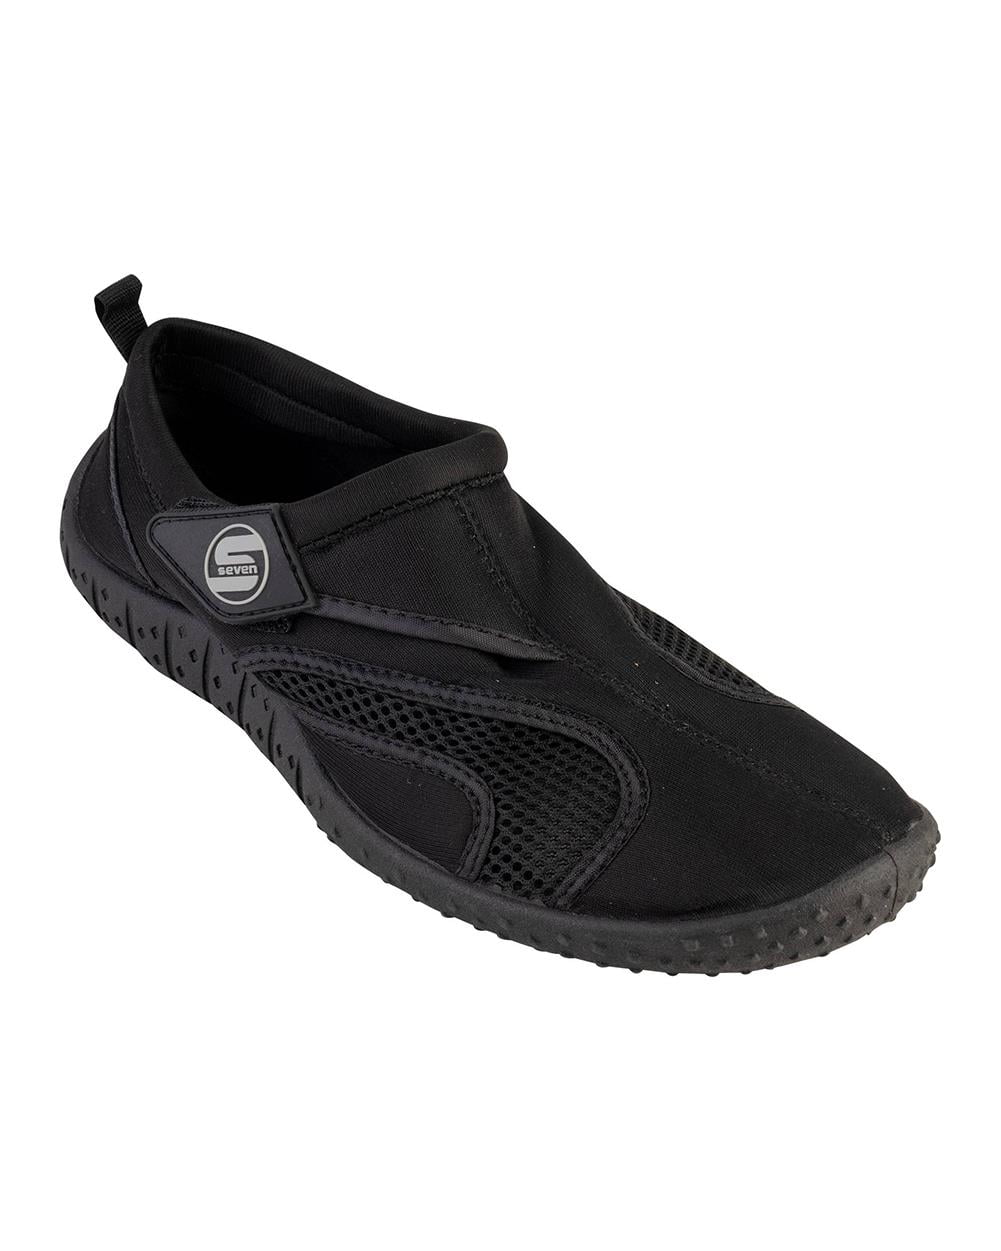 Details about   Fresko Men's Slip On Comfort Water Shoes 9 Medium US Black and Green 